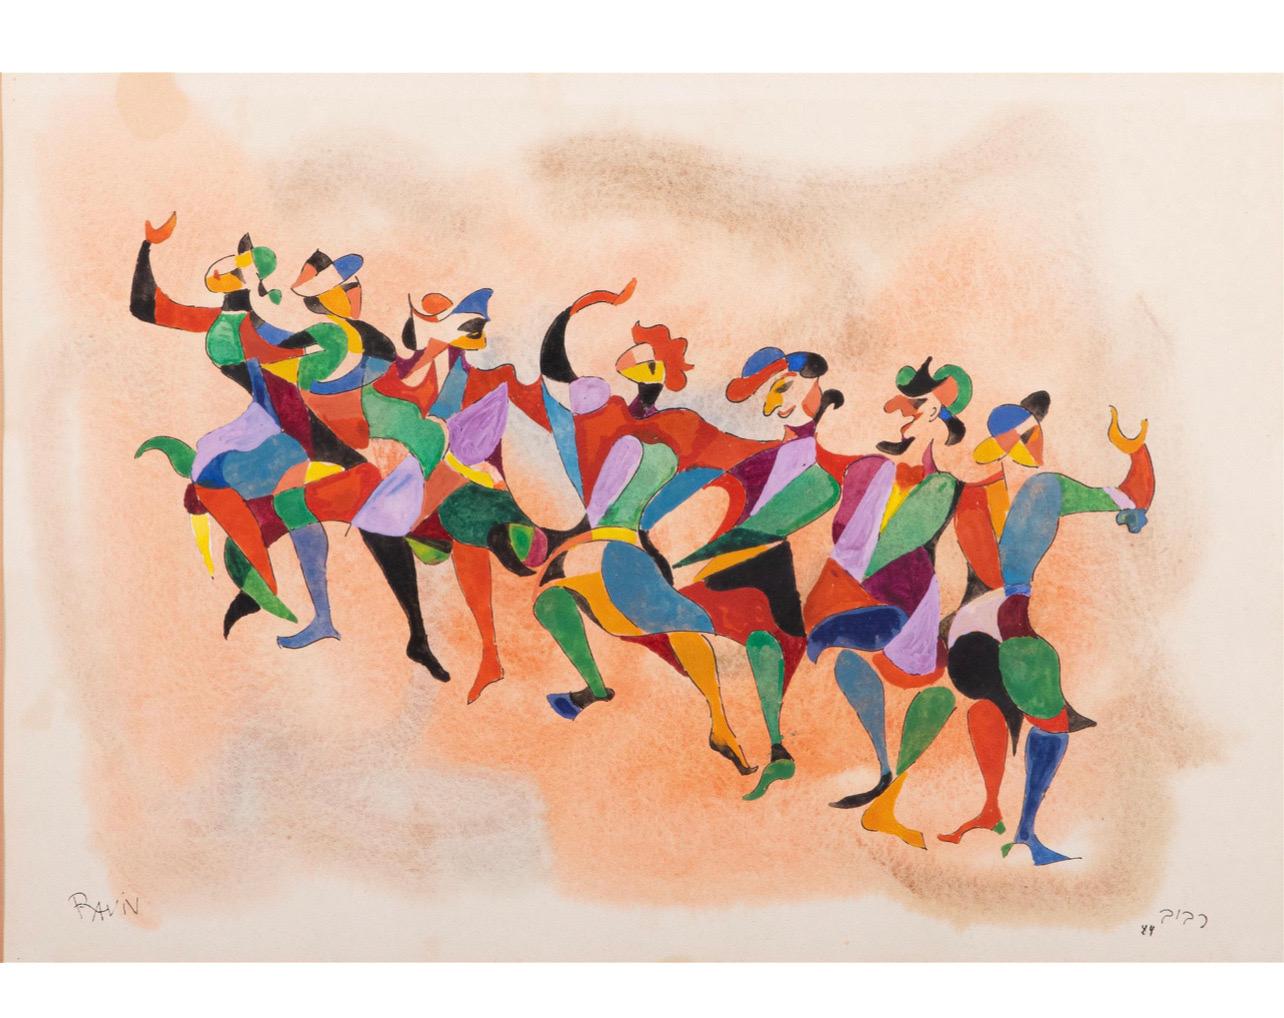 Peinture de danse abstraite lituanienne moderne israélienne du Bauhaus Moshe Raviv Moi Ver - Mixed Media Art de Moi Ver (Moshe Raviv Vorobeichic)